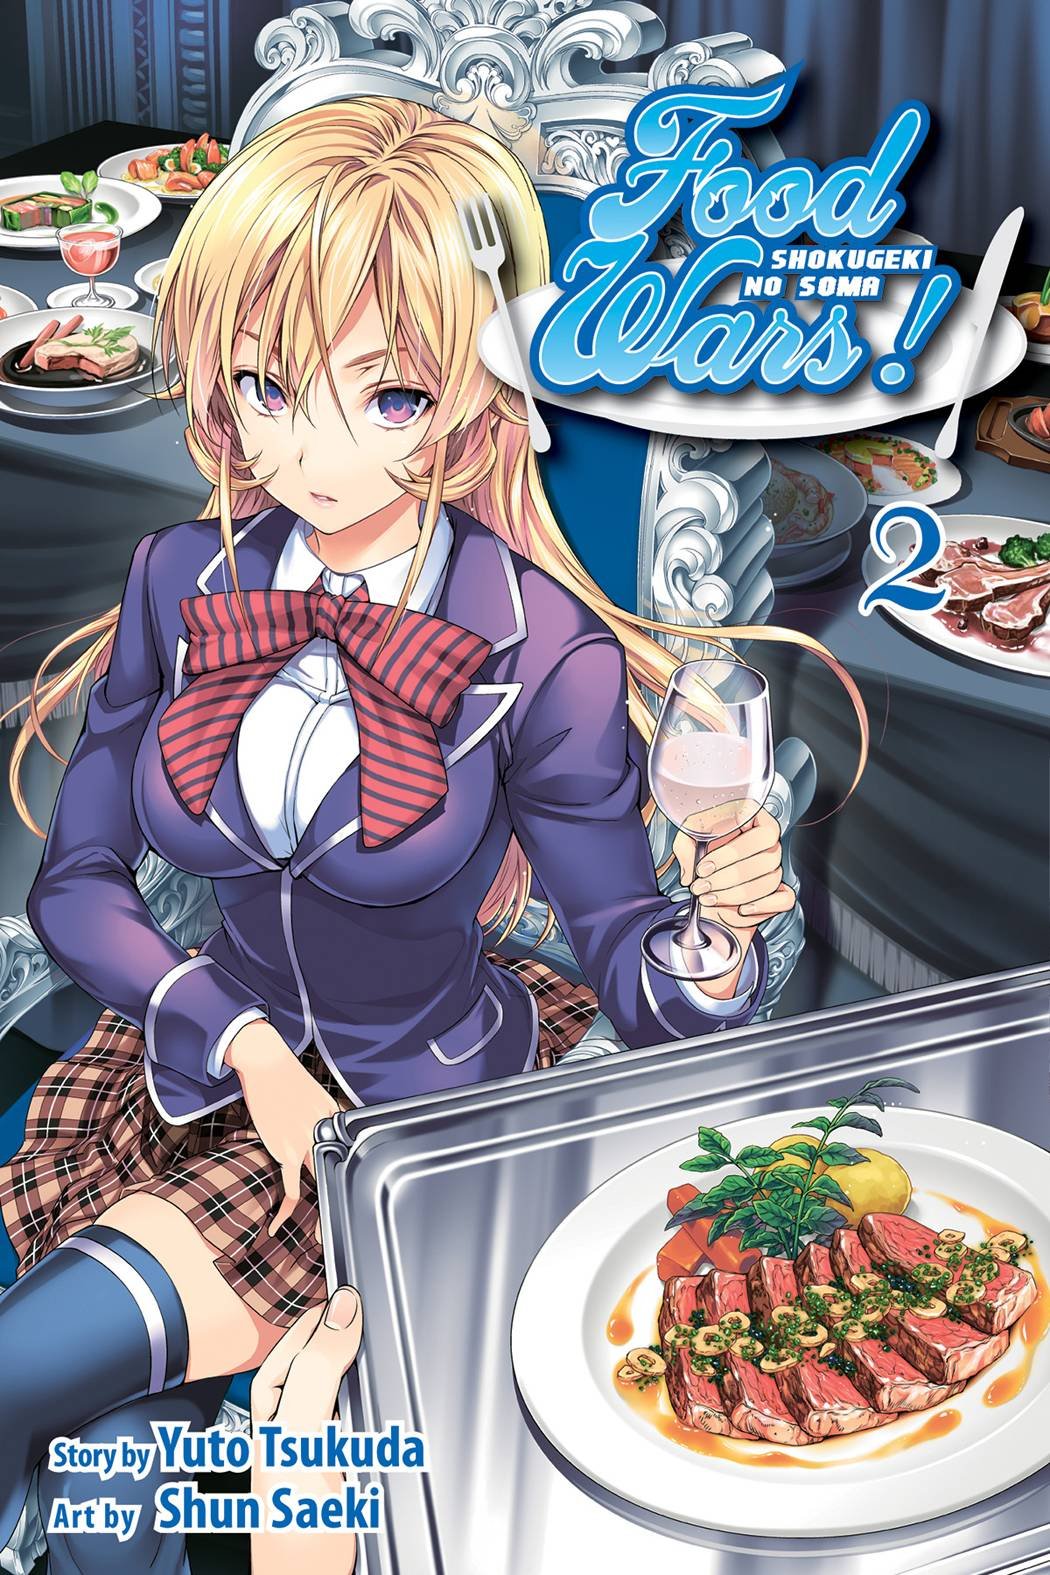 Food Wars: Shokugeki No Soma Backgrounds, Compatible - PC, Mobile, Gadgets| 1050x1575 px